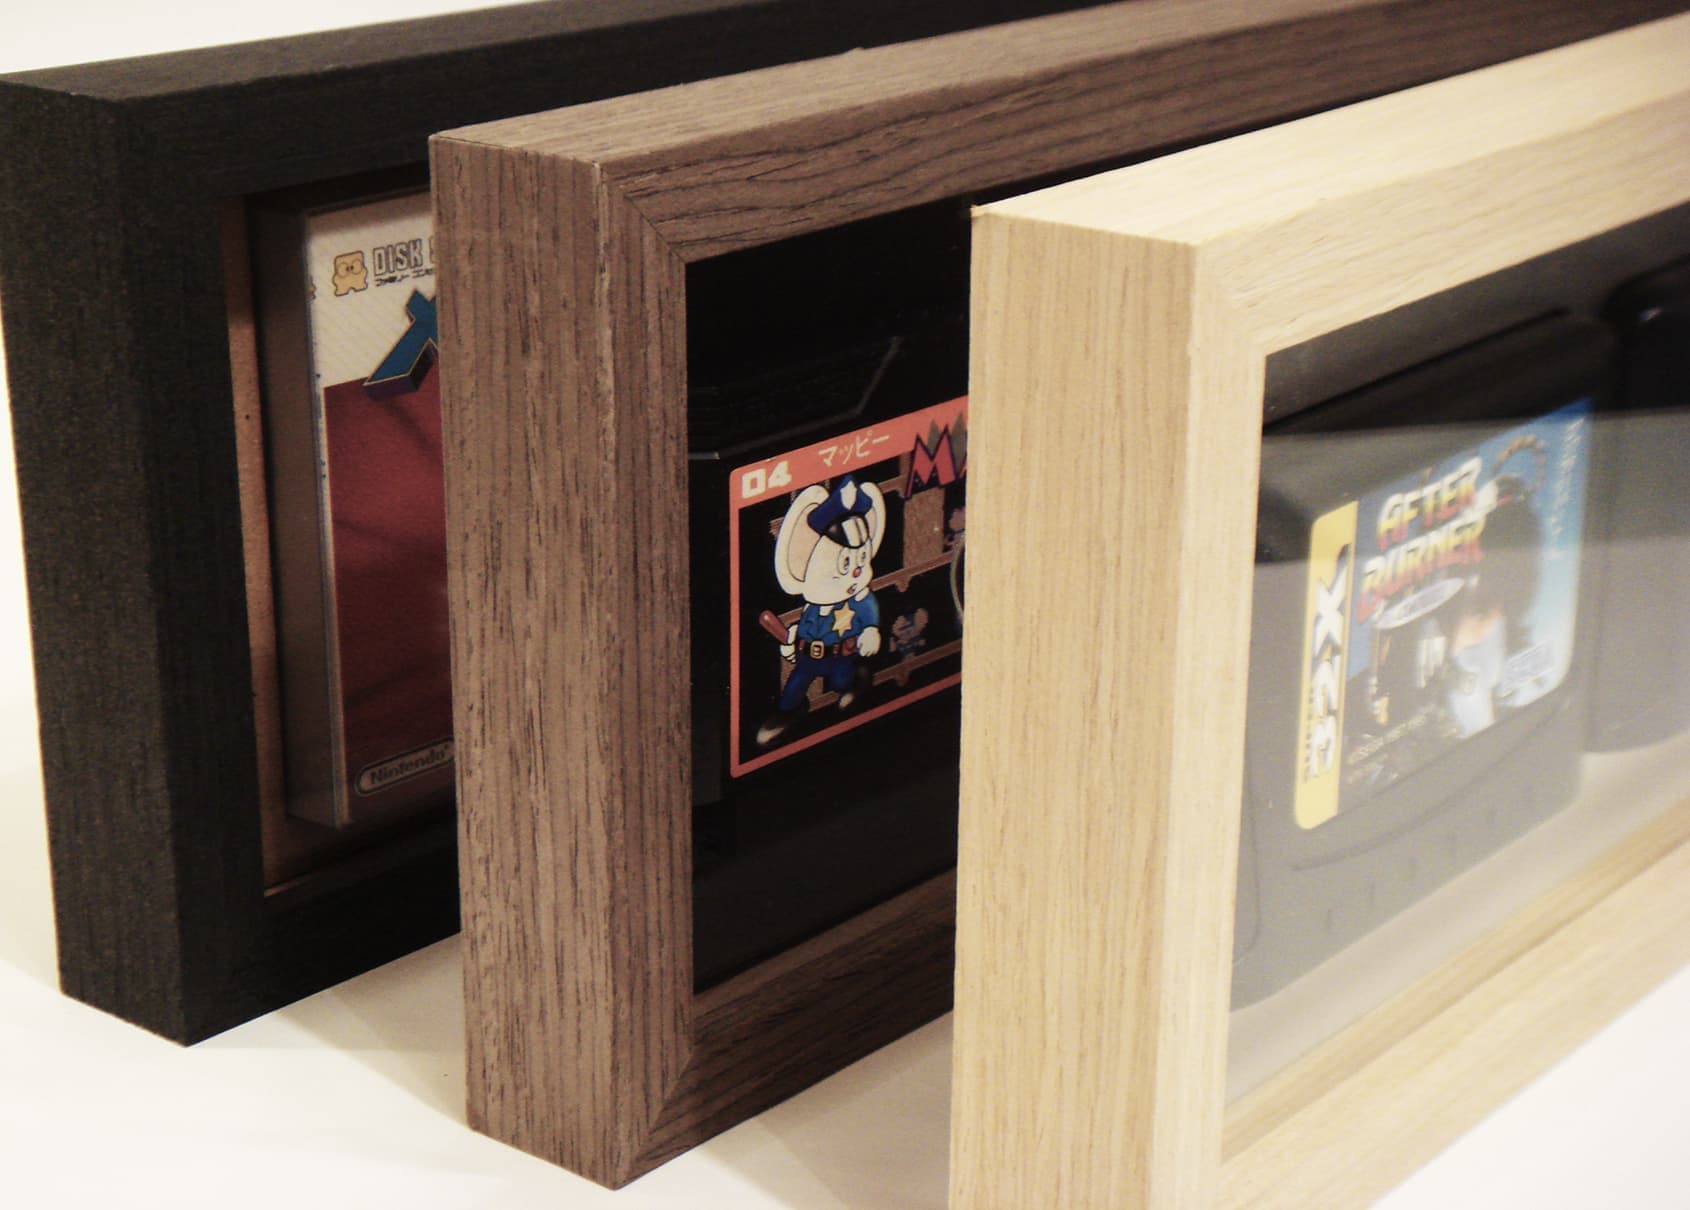 Cartridge frame for display